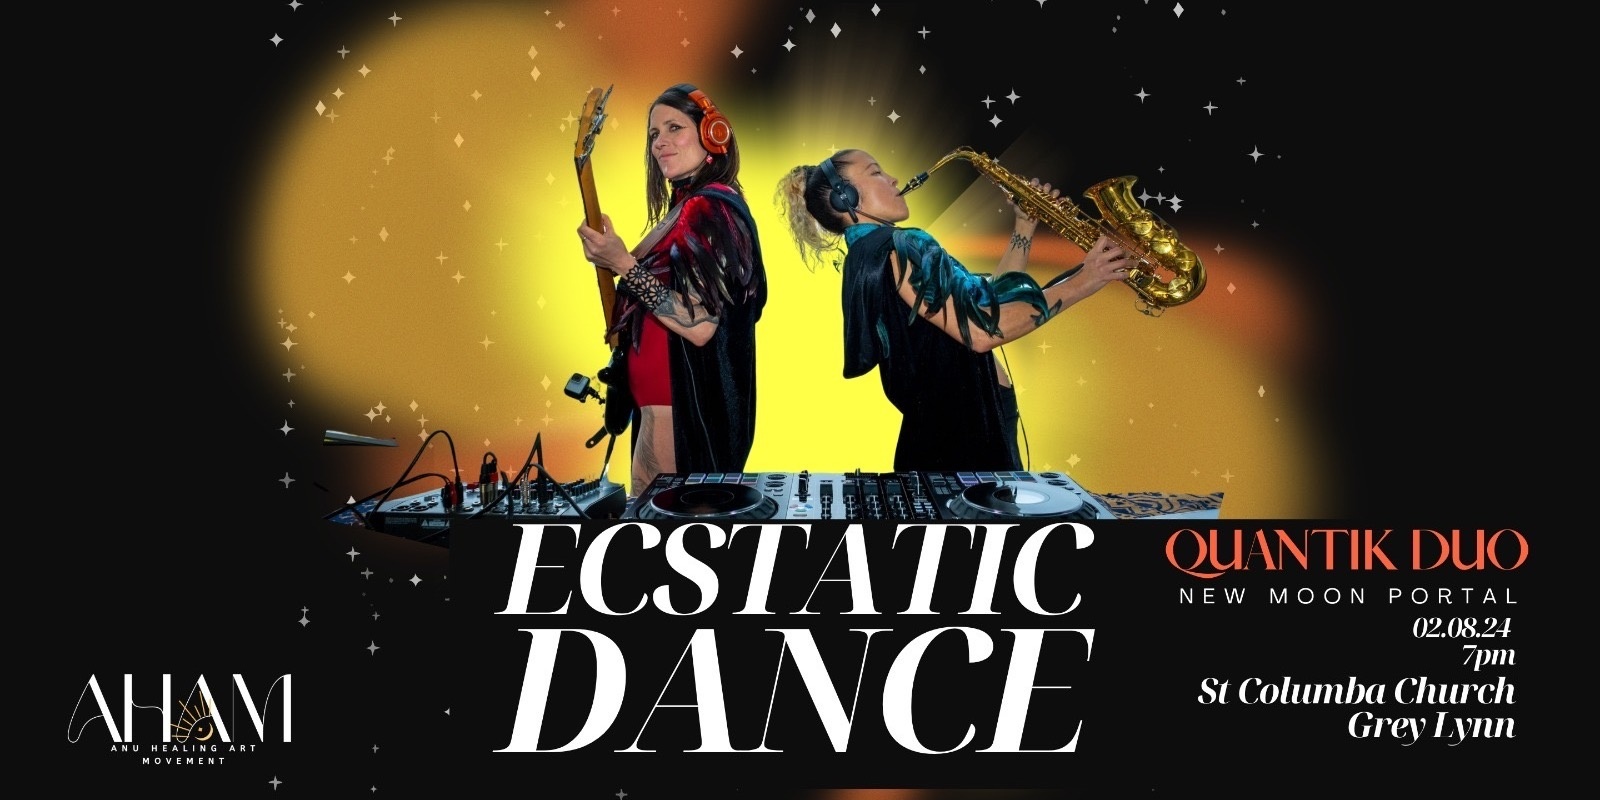 Banner image for New moon portal - Ecstatic Dance ft. Quantik duo 